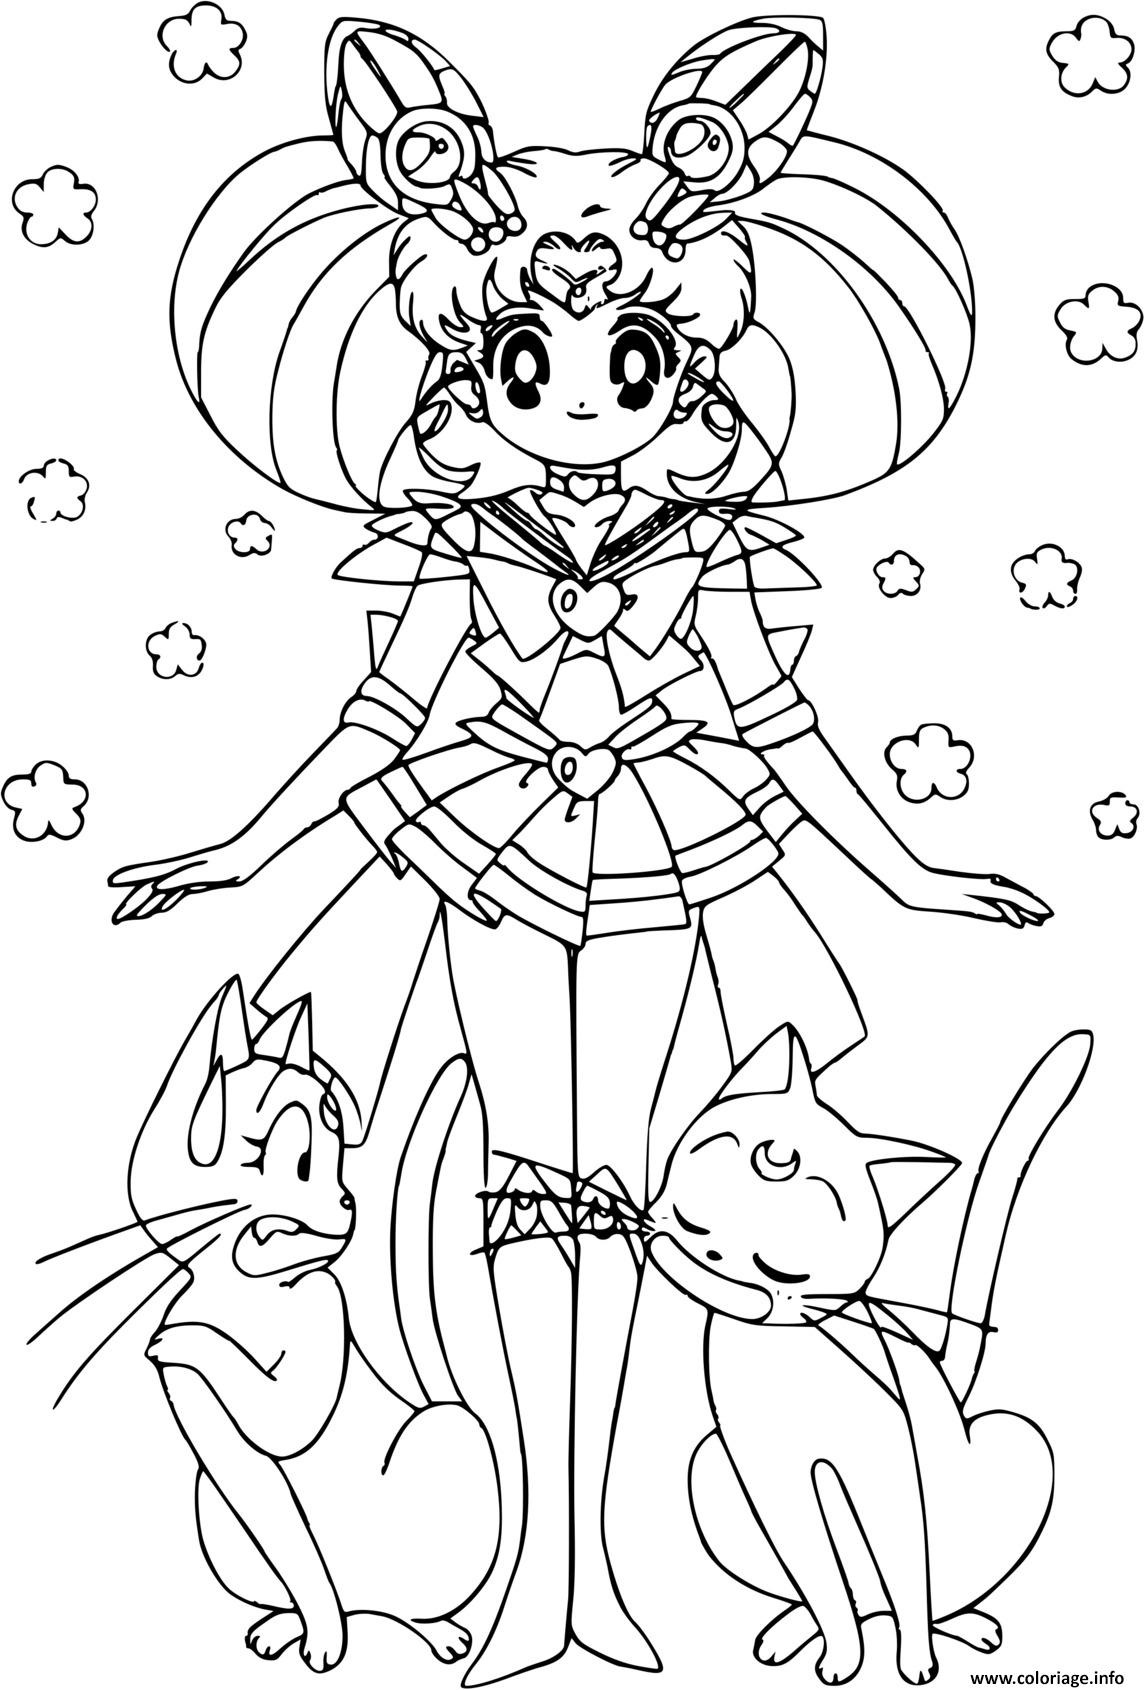 Coloriage Sailor Moon And Cats Dessin à Imprimer